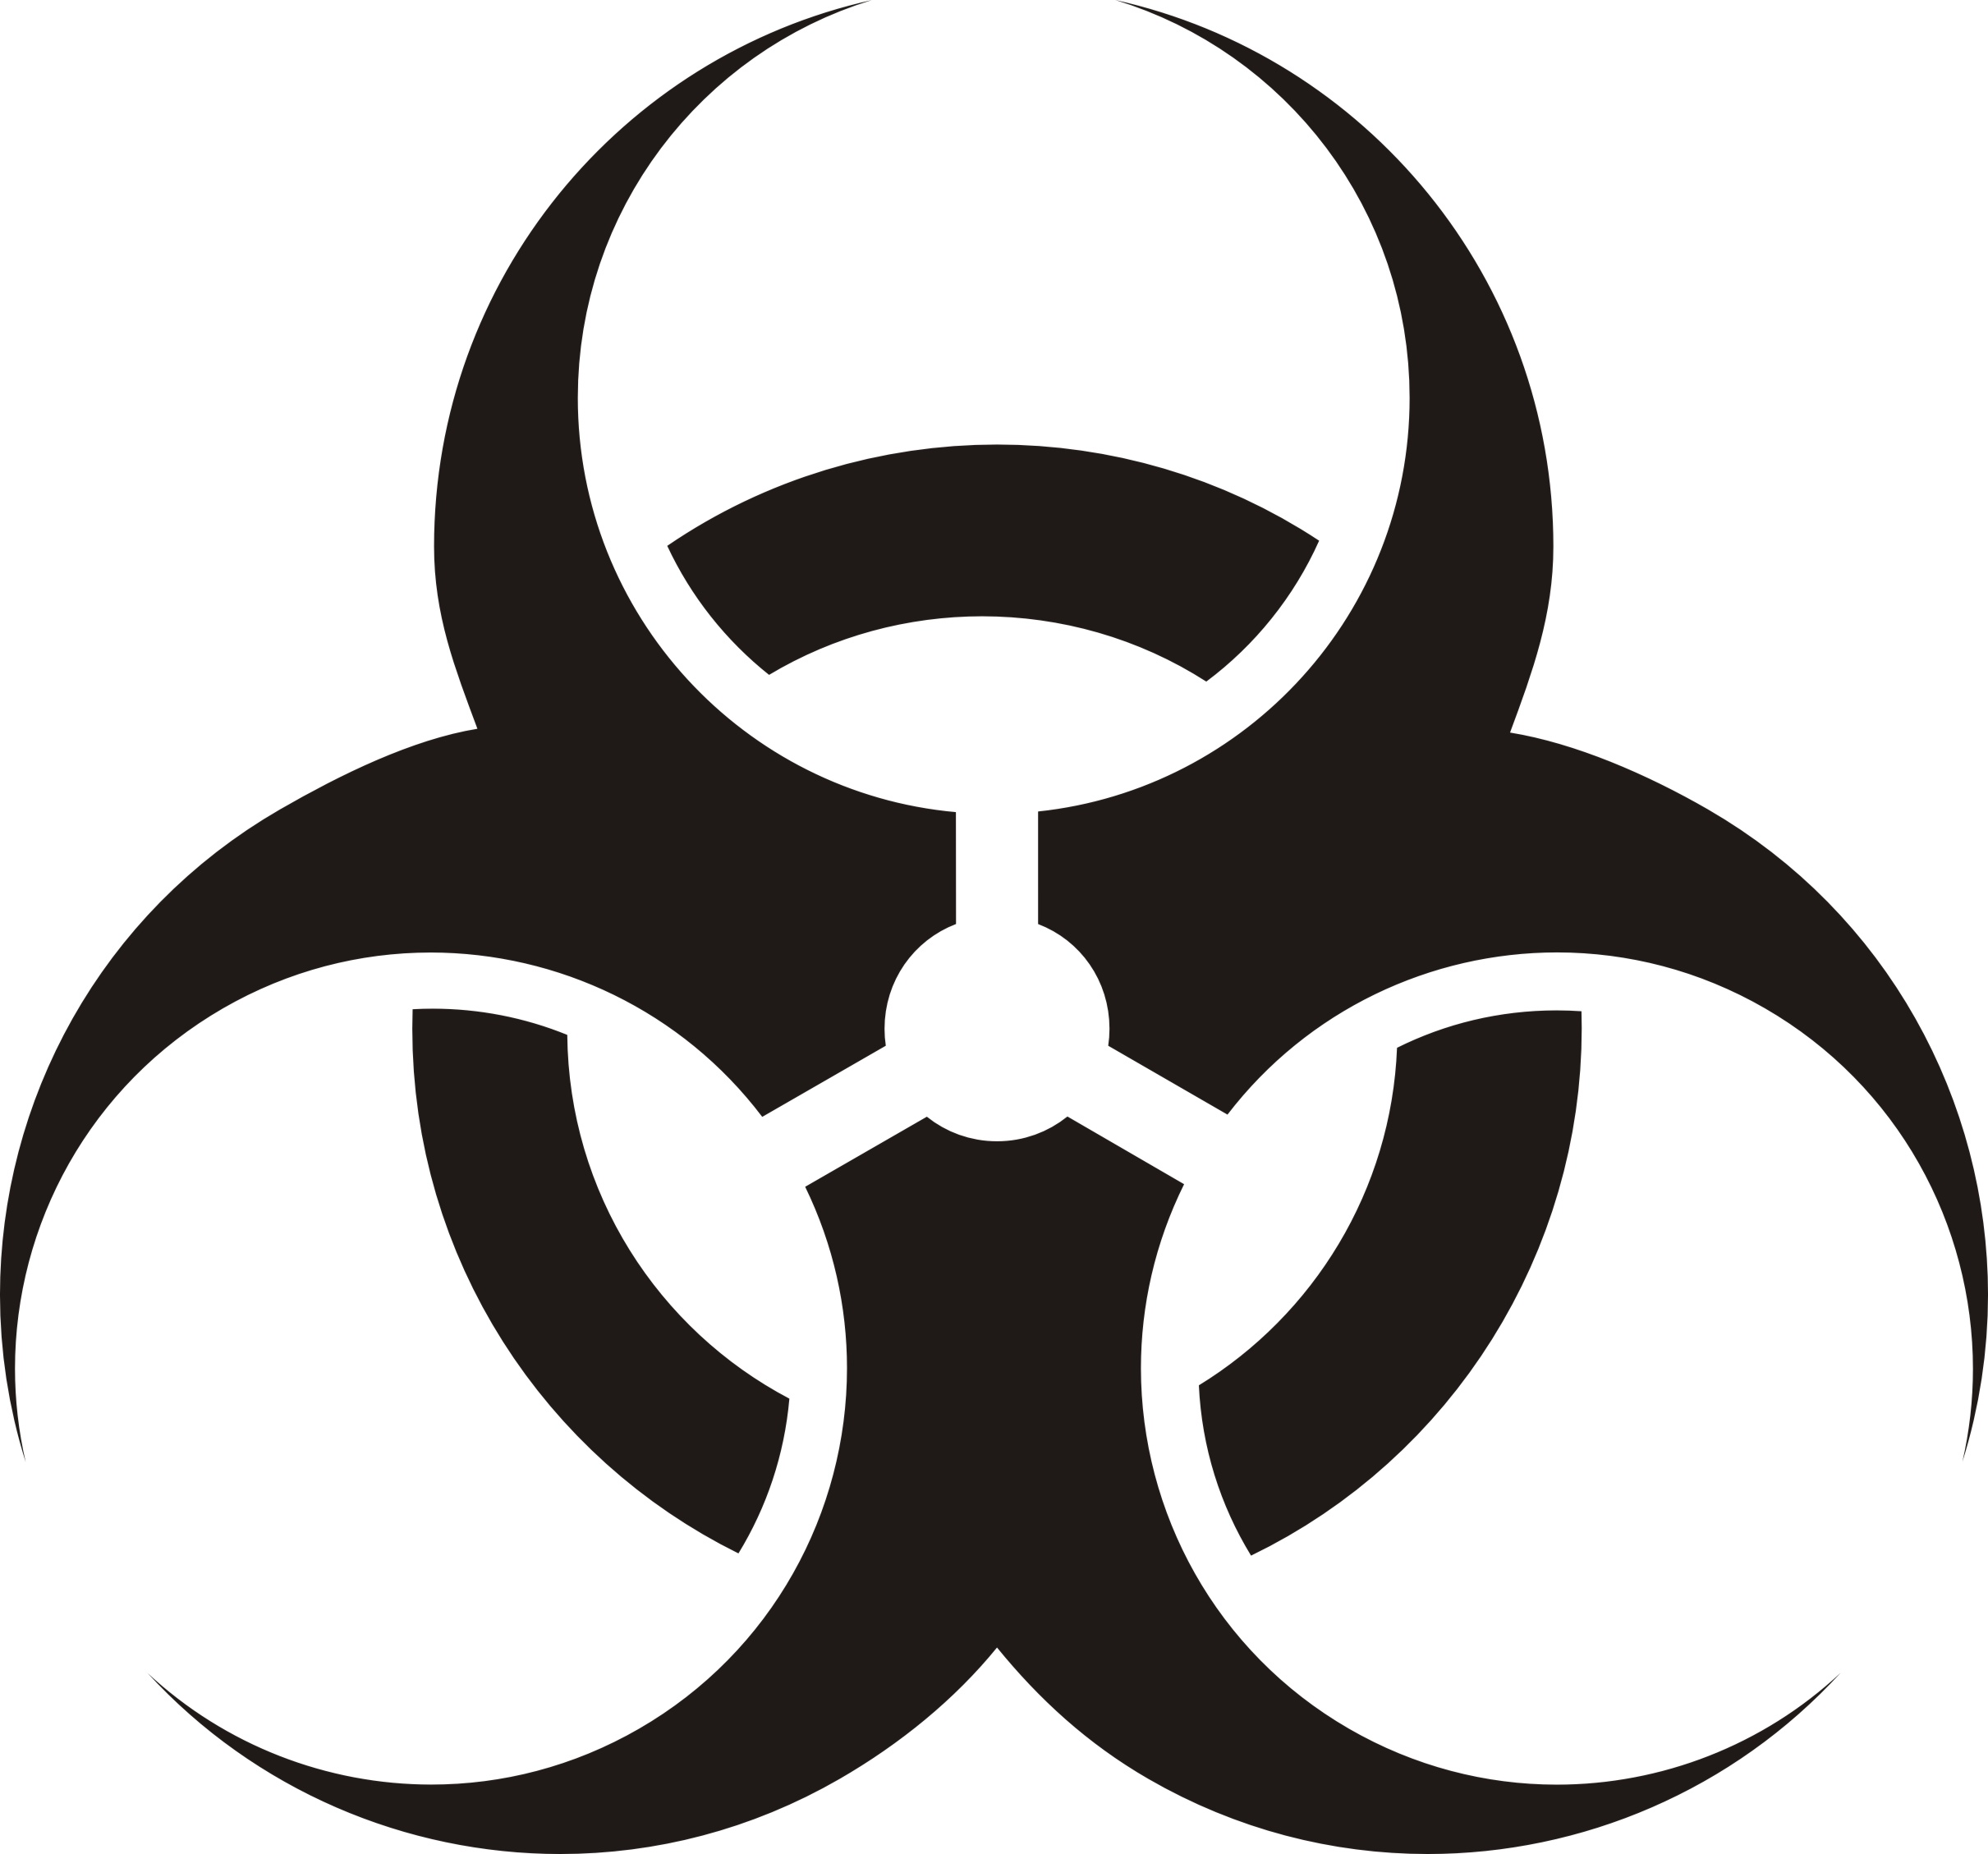 Cool Biohazard Symbols - Clipart library